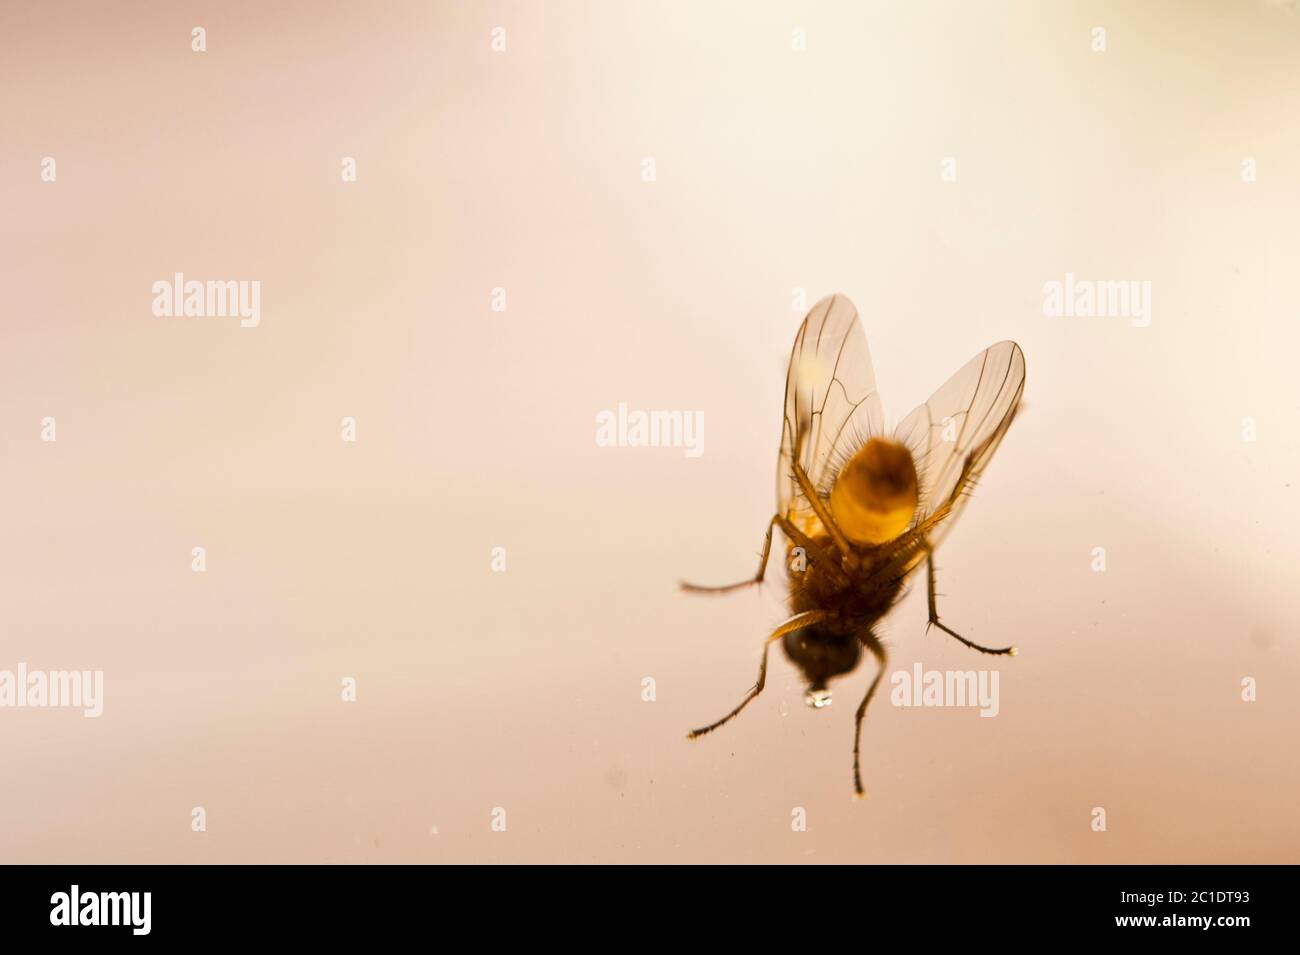 Camptoprosopella fly on a window Stock Photo